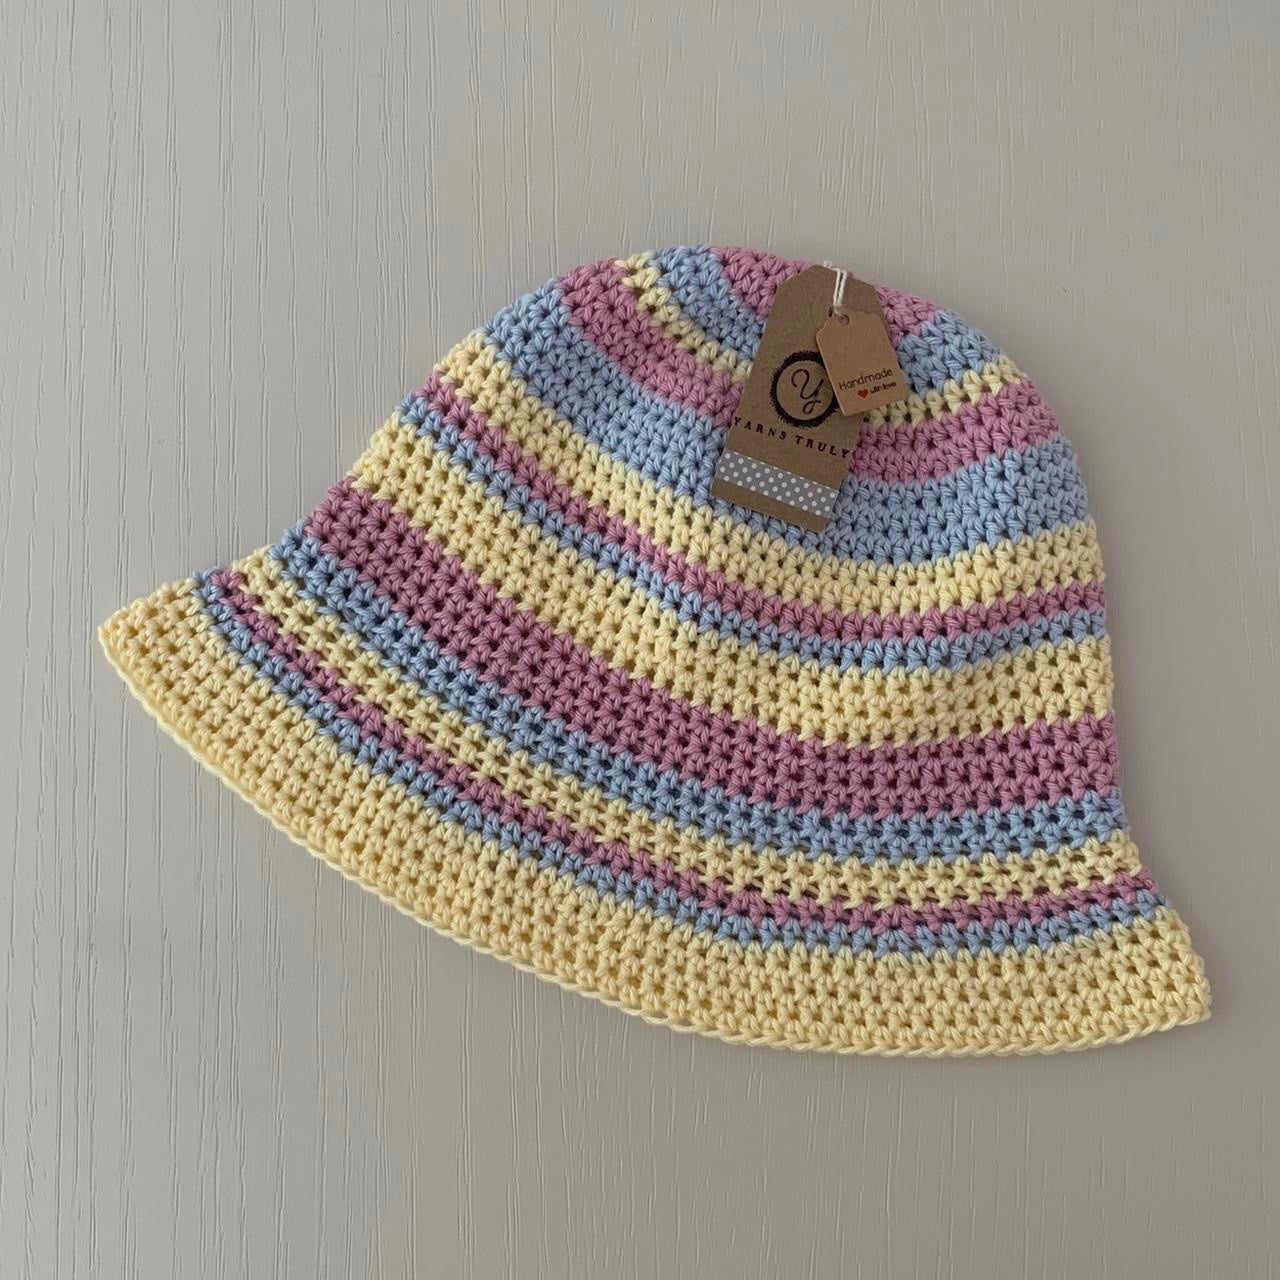 Handmade cotton crochet bucket hat in striped pastel shades